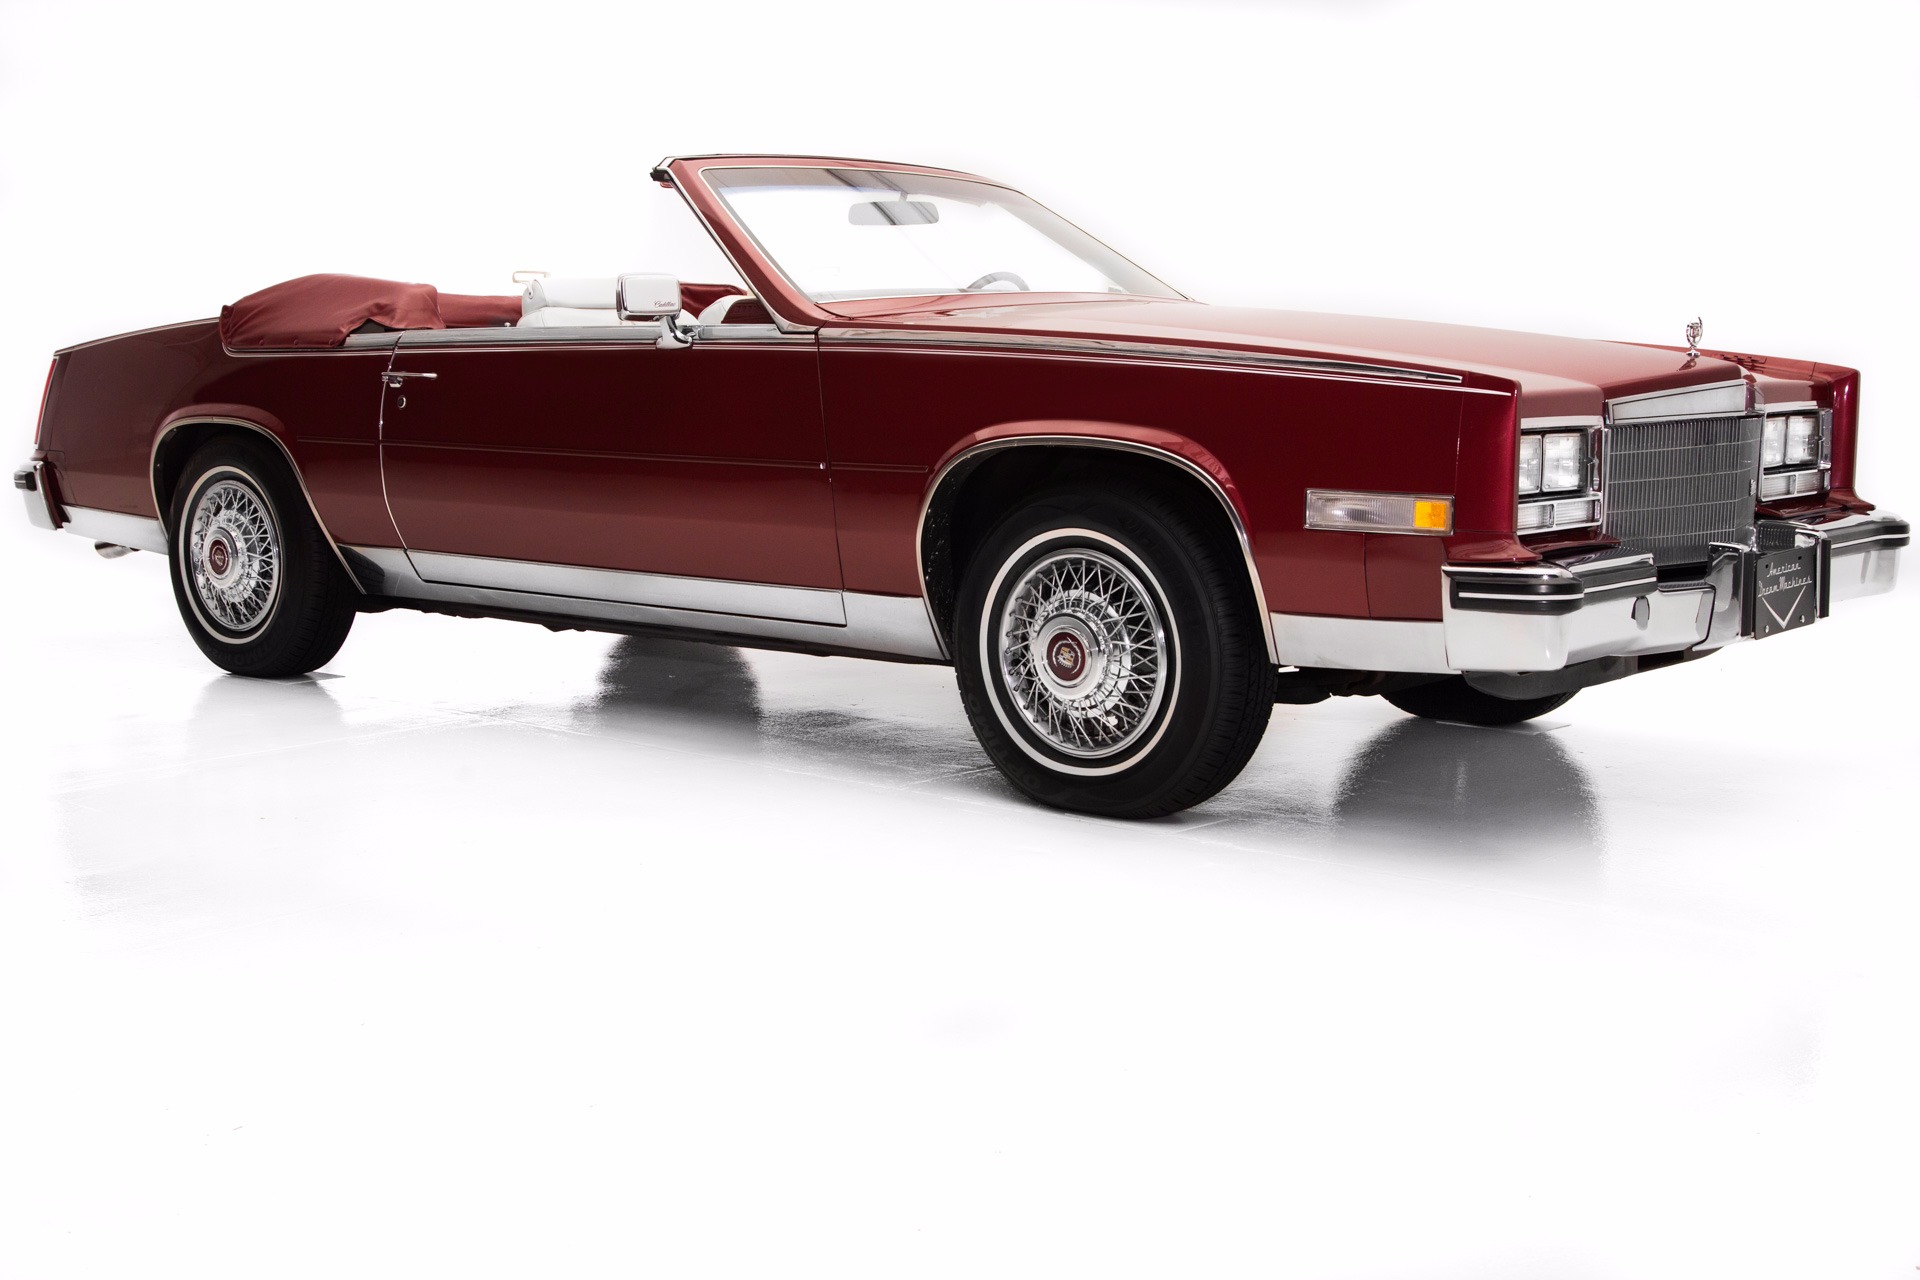 For Sale Used 1984 Cadillac Eldorado Biarritz 55k Miles,  Loaded!!!! | American Dream Machines Des Moines IA 50309